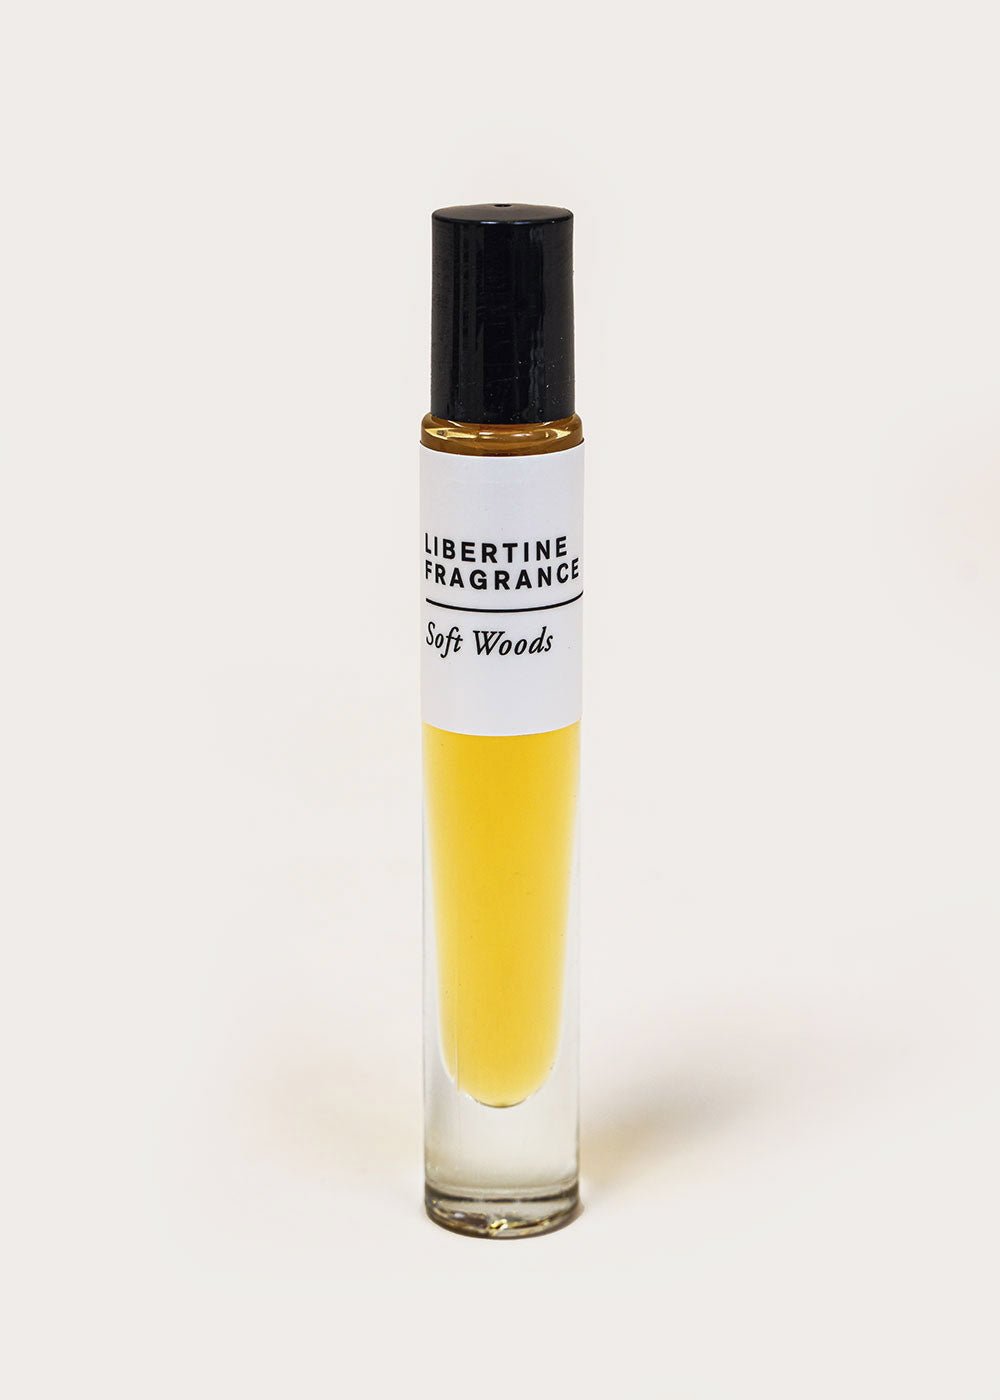 Libertine Fragrance Soft Woods Perfume Oil - New Classics Studios Sustainable Ethical Fashion Canada